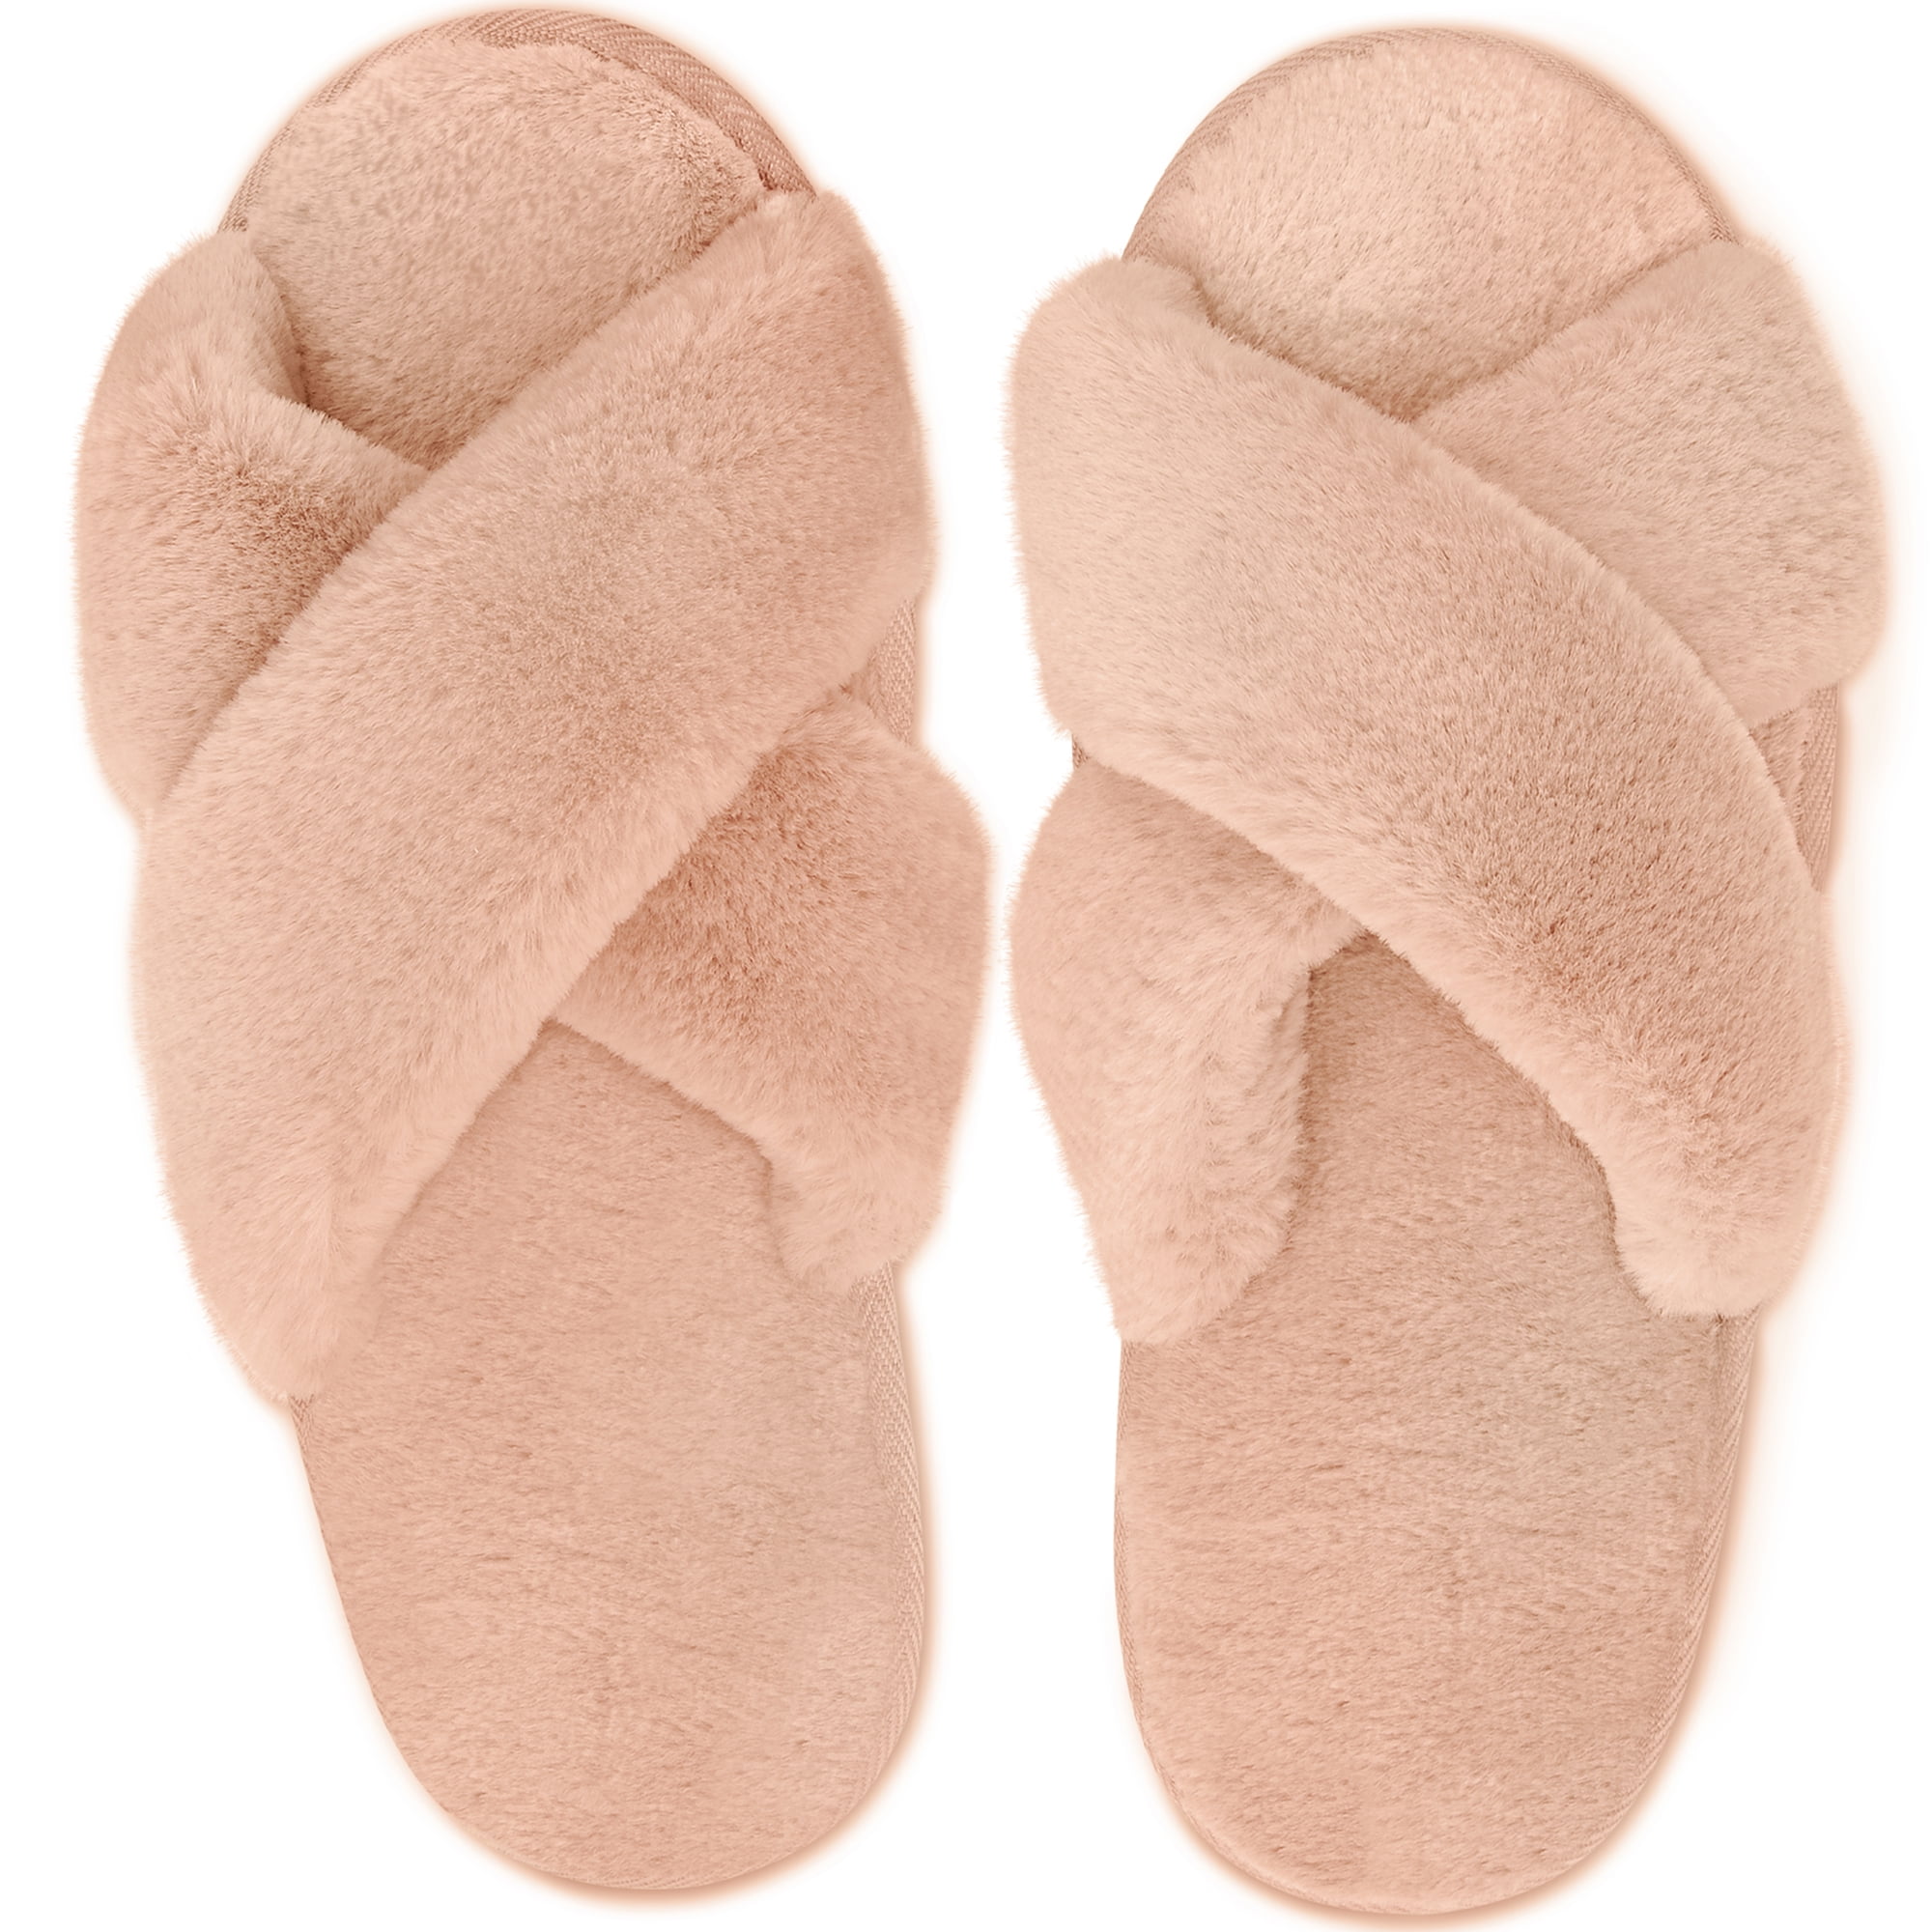 GFHFHITJ Womens Open Toe Sandals Crystal Flip Flop Flats Open Toe Comfortable Slip-on Slippers